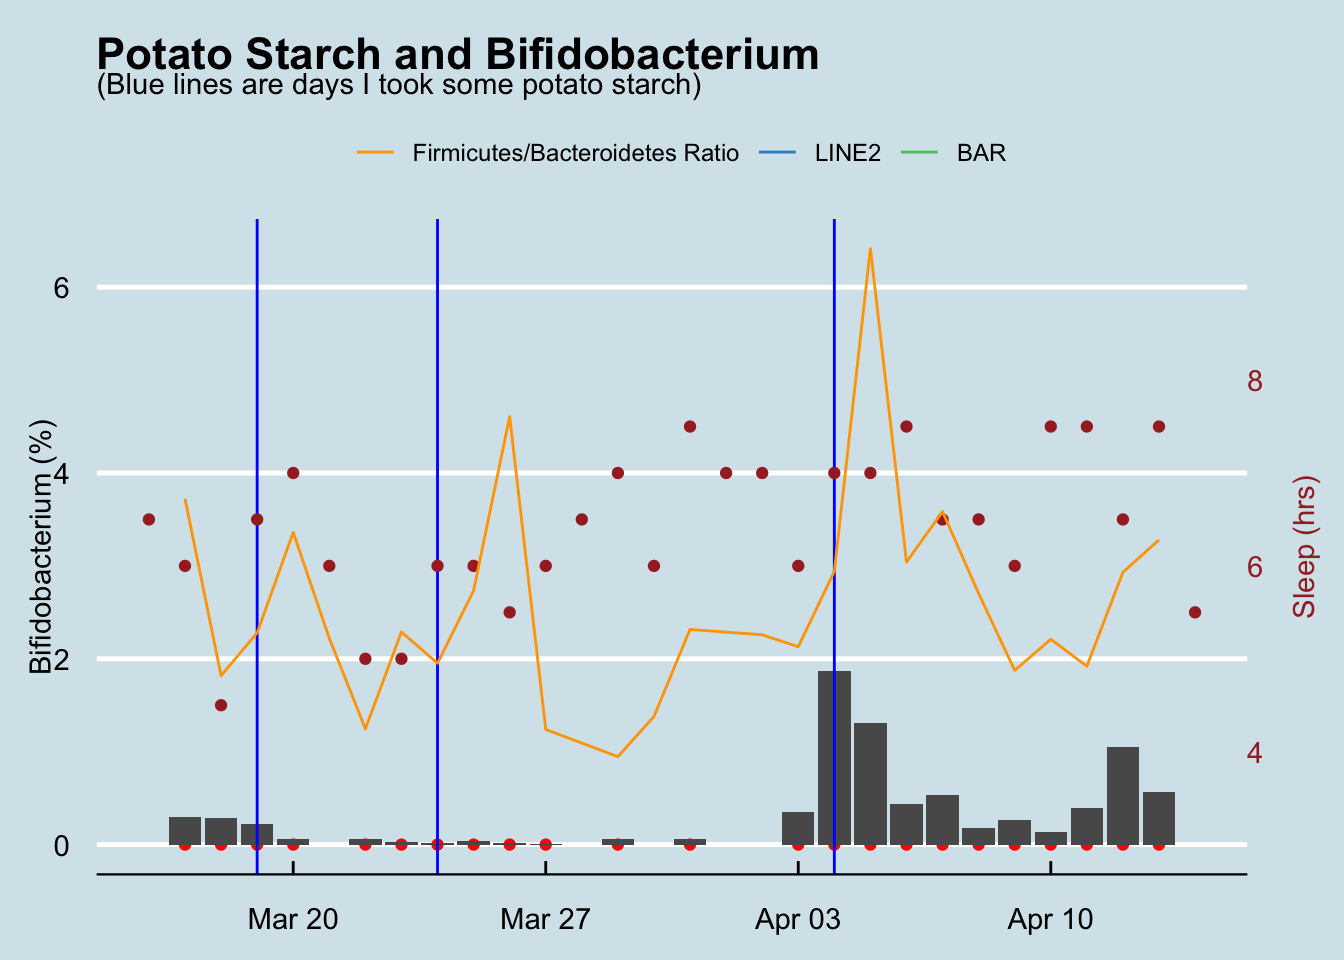 No apparent relationship between small amounts (1-2 tsp) of raw potato starch and Bifidobacterium abundance